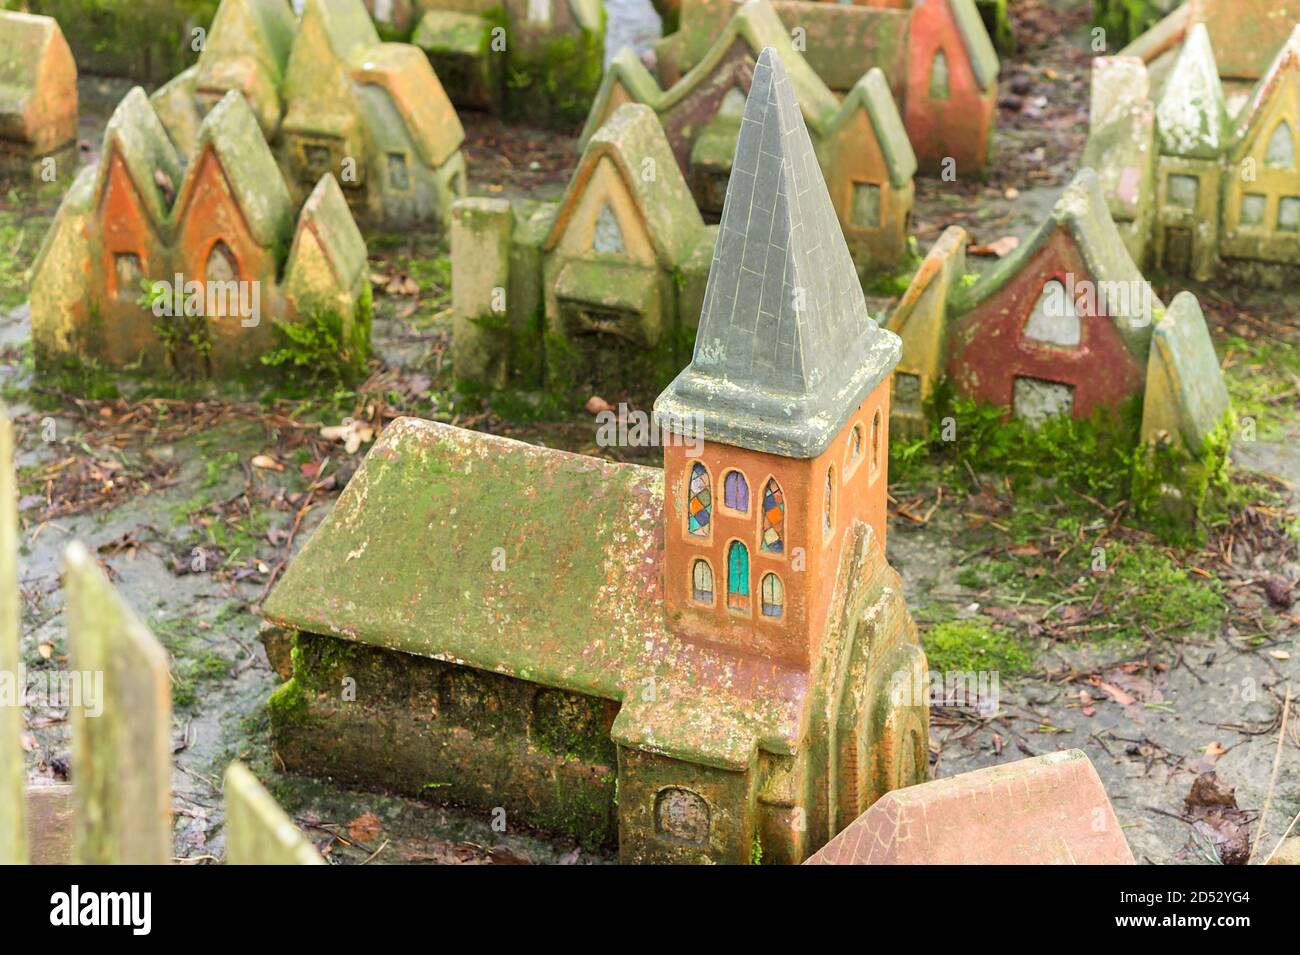 model of the old Koenigsberg, figures based on fairy tales by Ernst Theodor Amadeus Hoffmann, Russia, Kaliningrad region, Svetlogorsk, Hoffmann House, Stock Photo